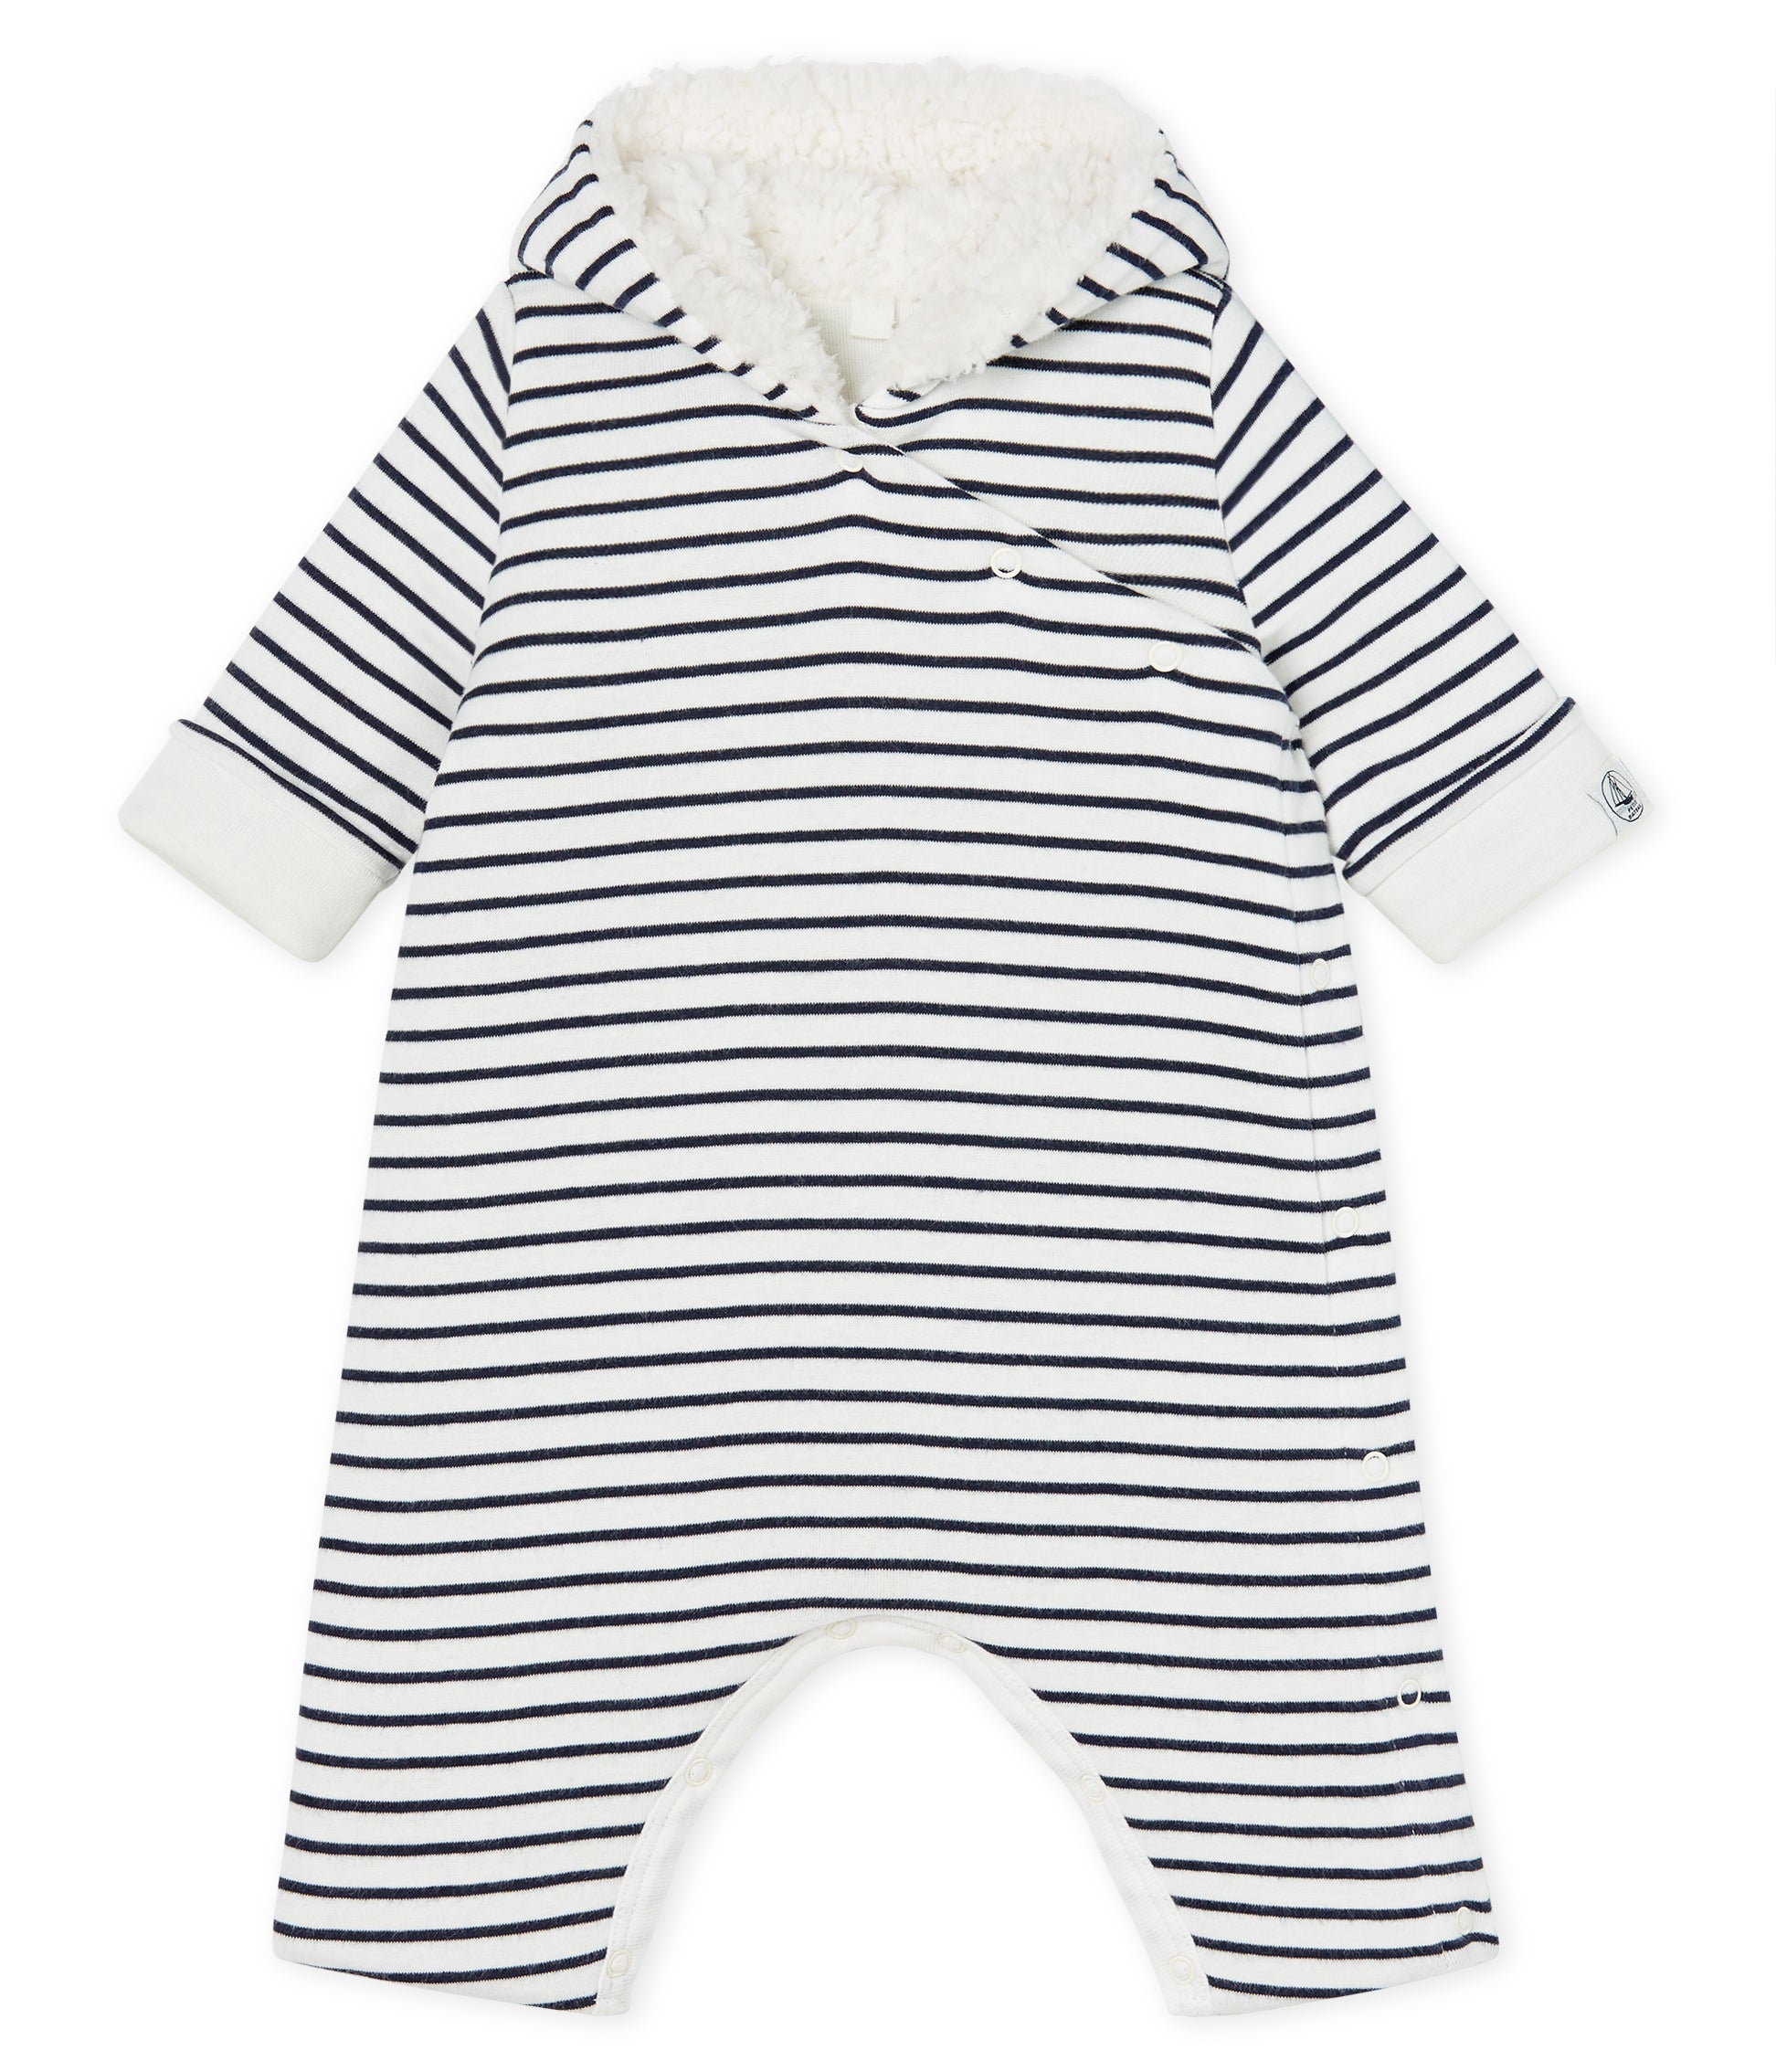 Baby Boys White & Black Striped Cotton Babysuit